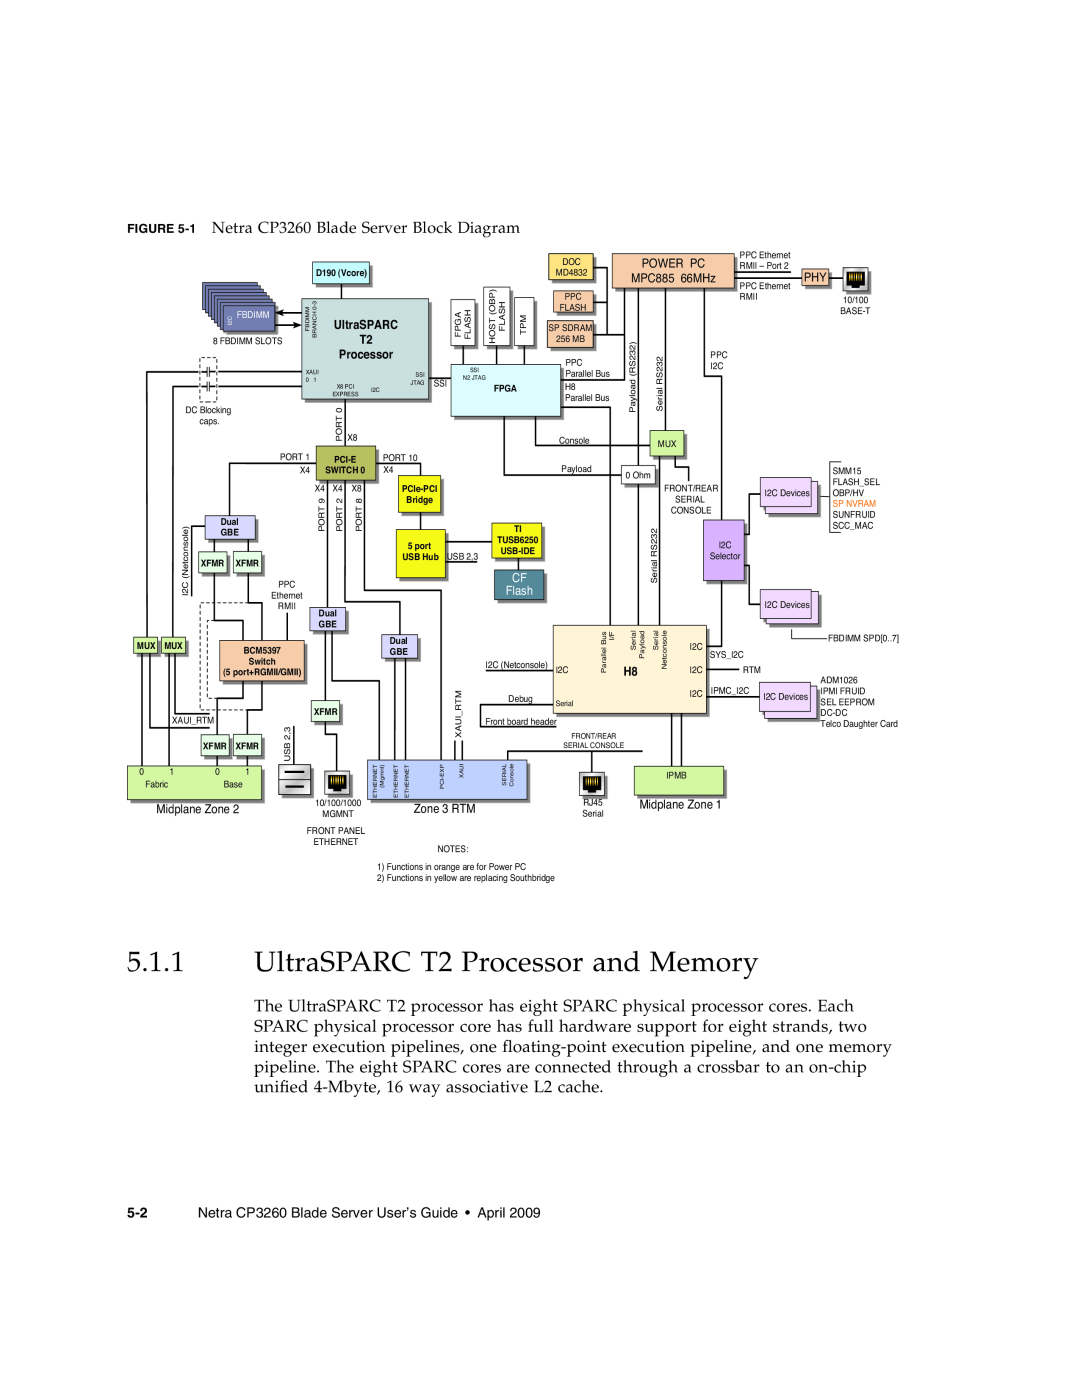 Sun Microsystems UltraSPARC T2 Processor and Memory, Netra CP3260 Blade Server User’s Guide April, Flash, Midplane Zone 